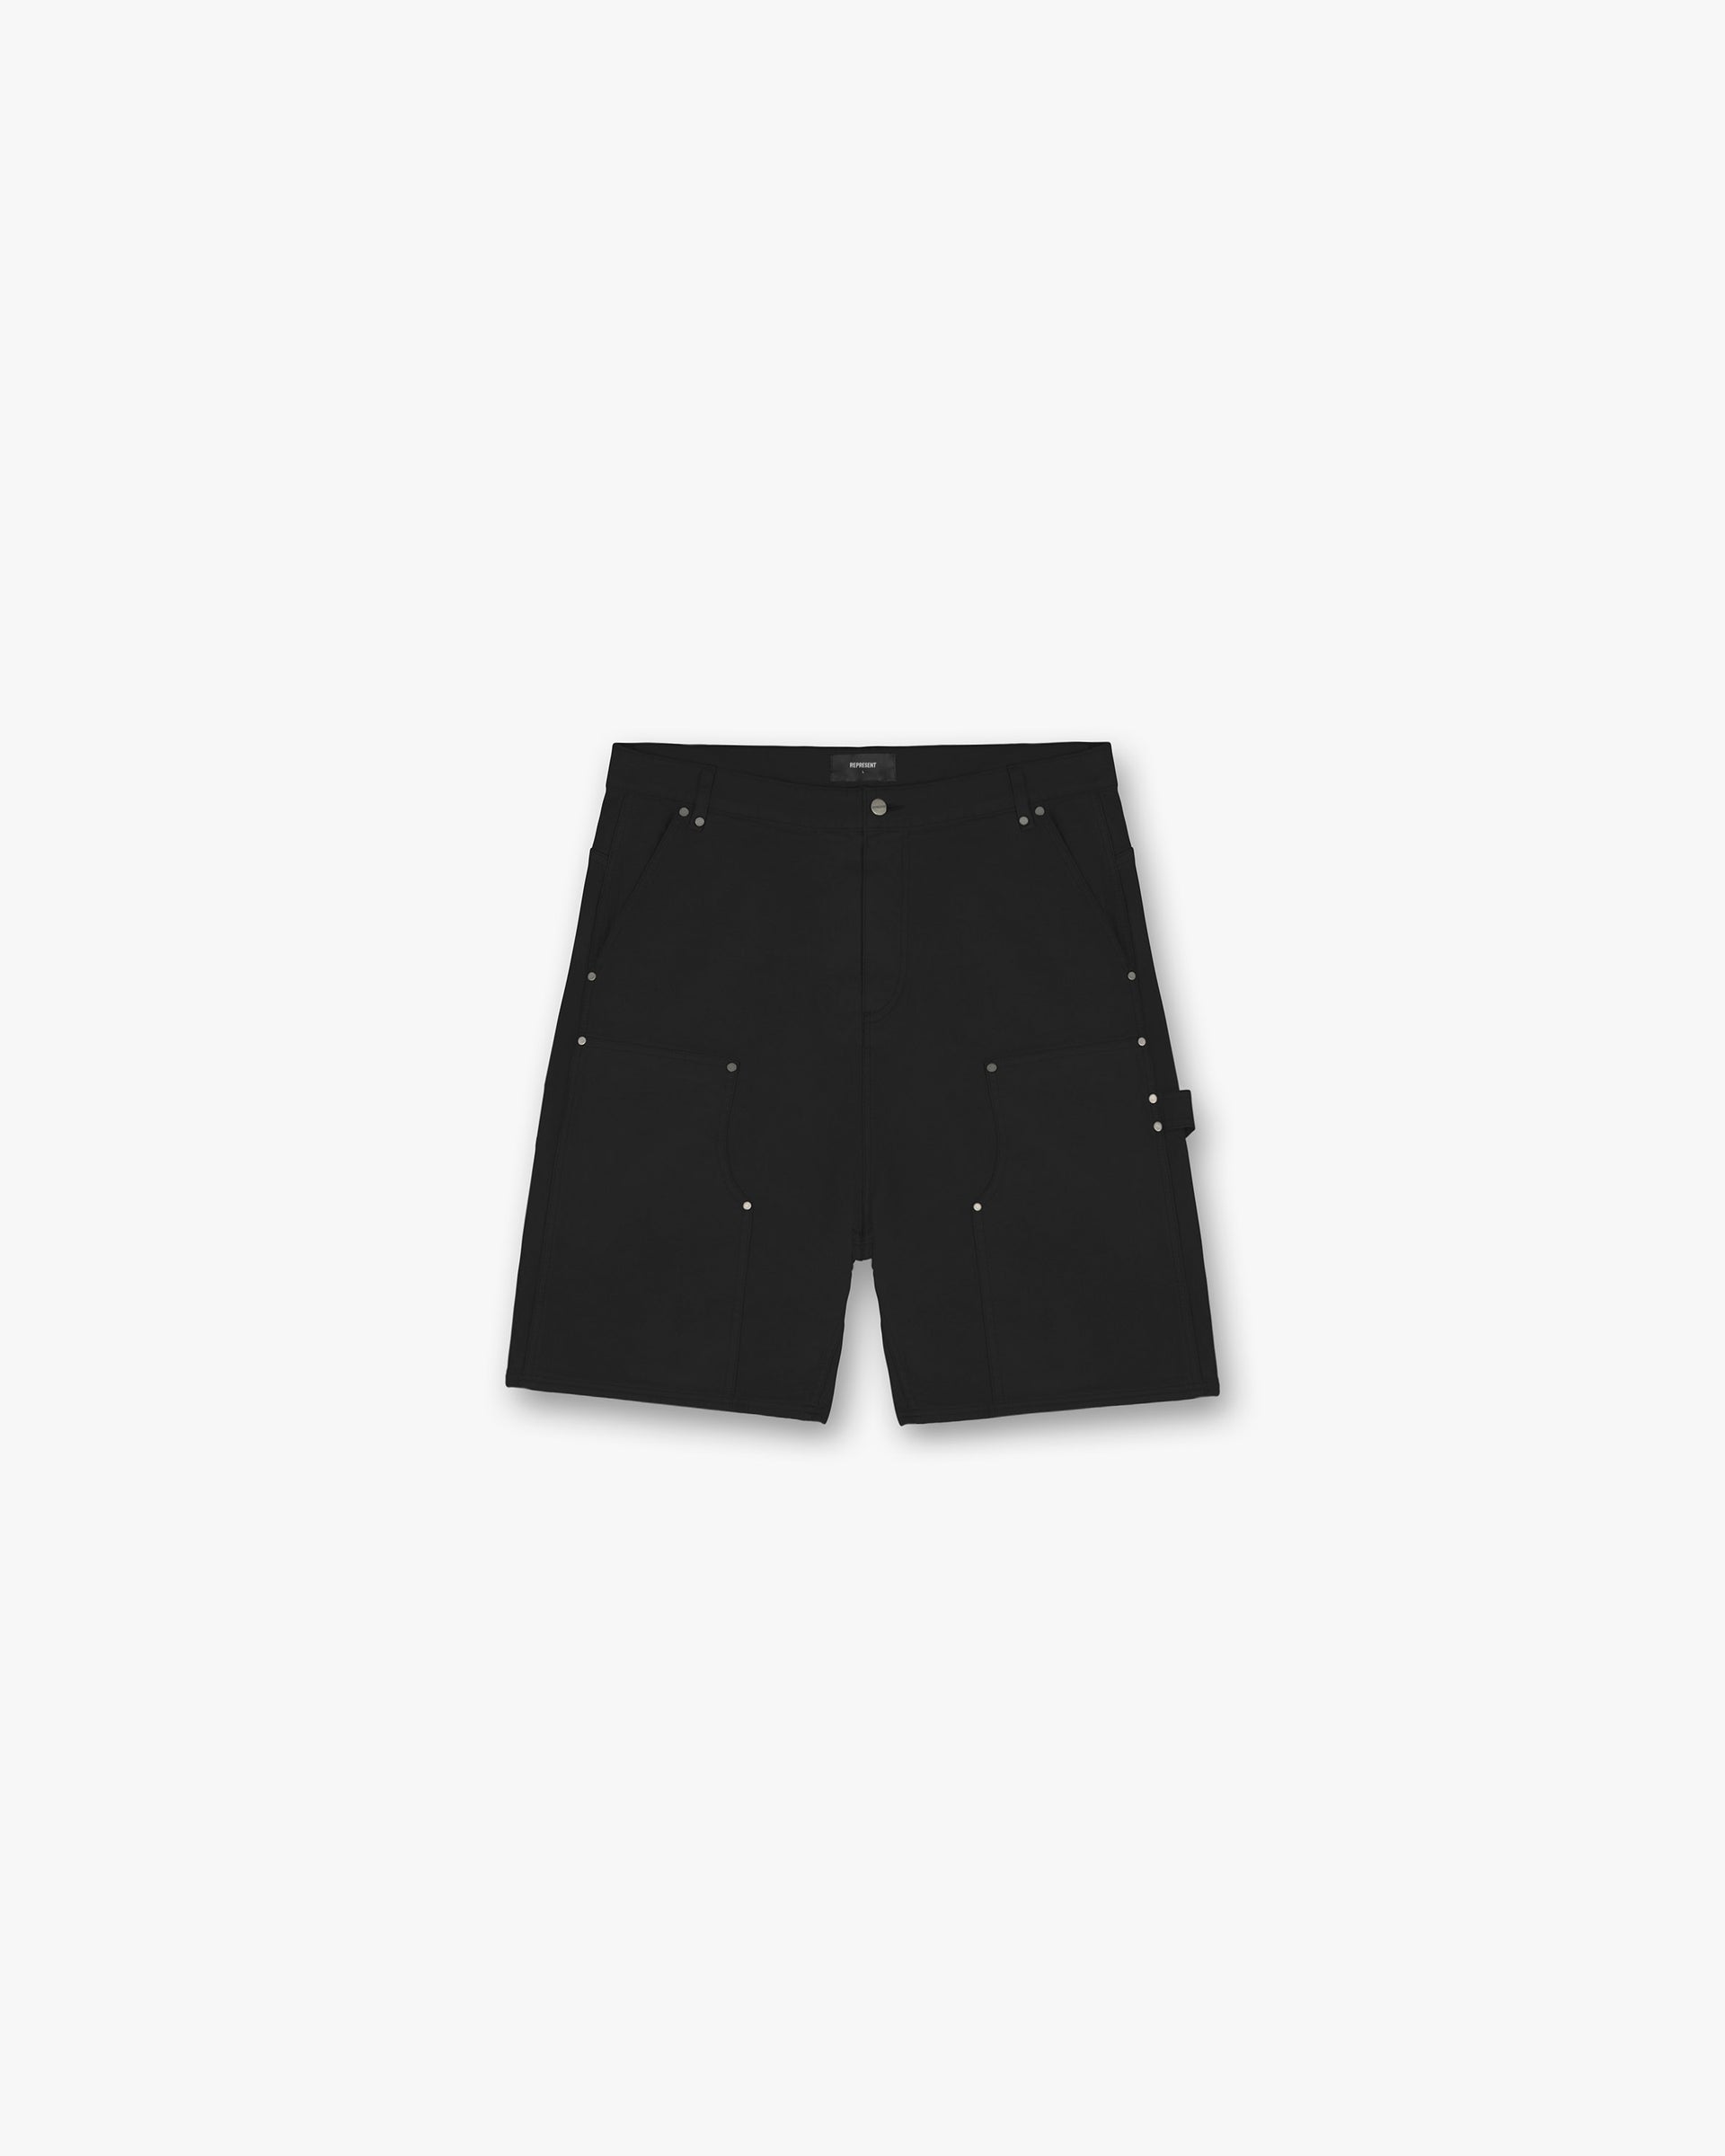 Utility Shorts | Black Shorts SC23 | Represent Clo